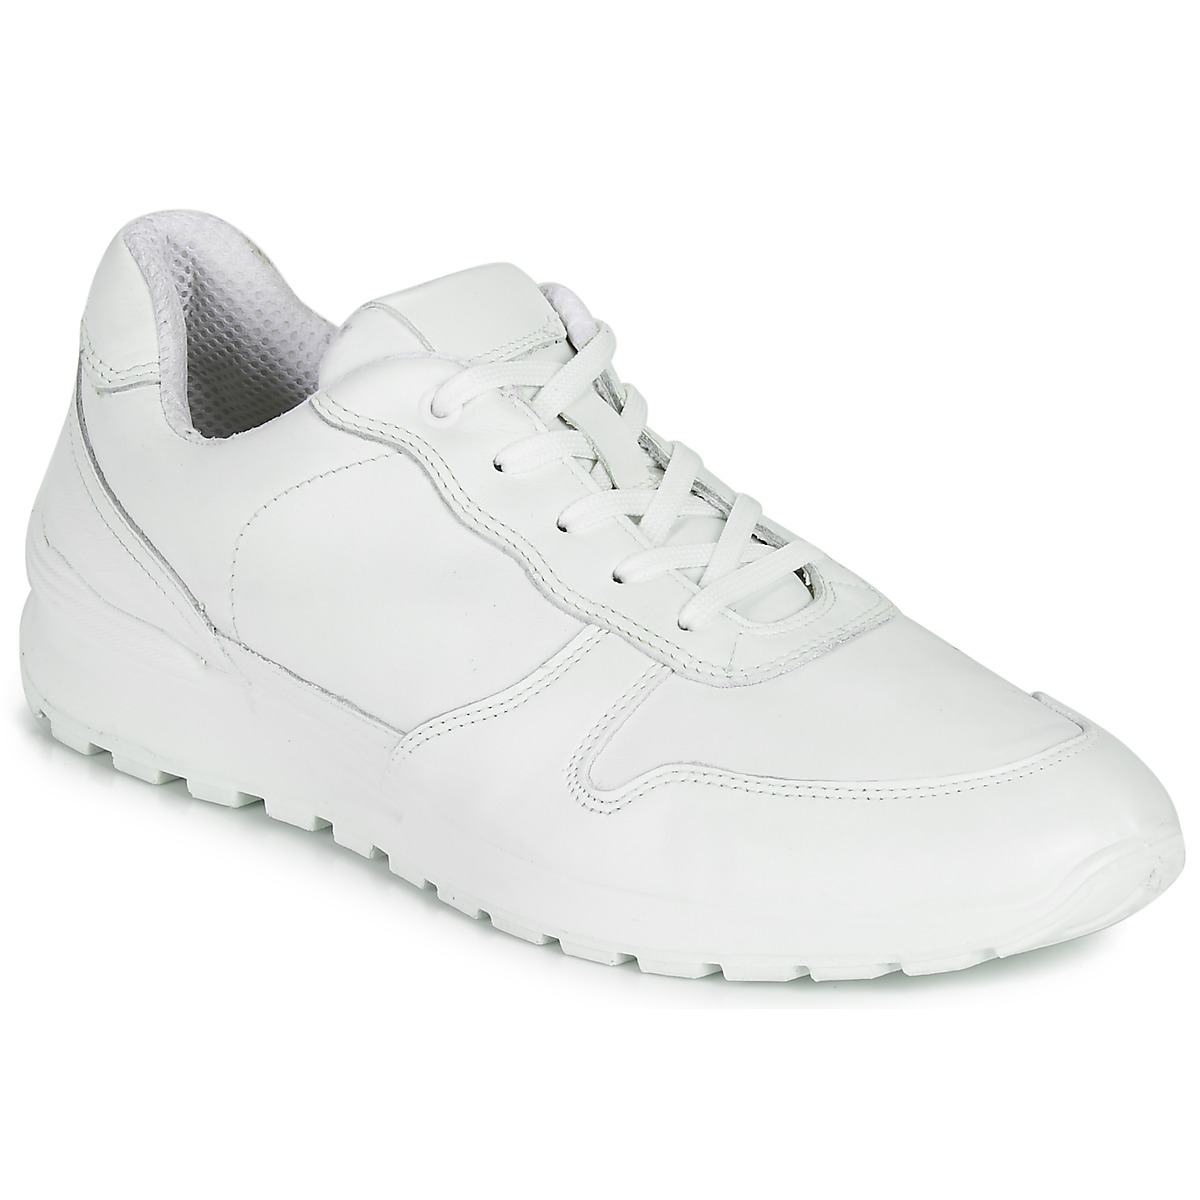 Shoes Men Low top trainers Casual Attitude NOUCHE White